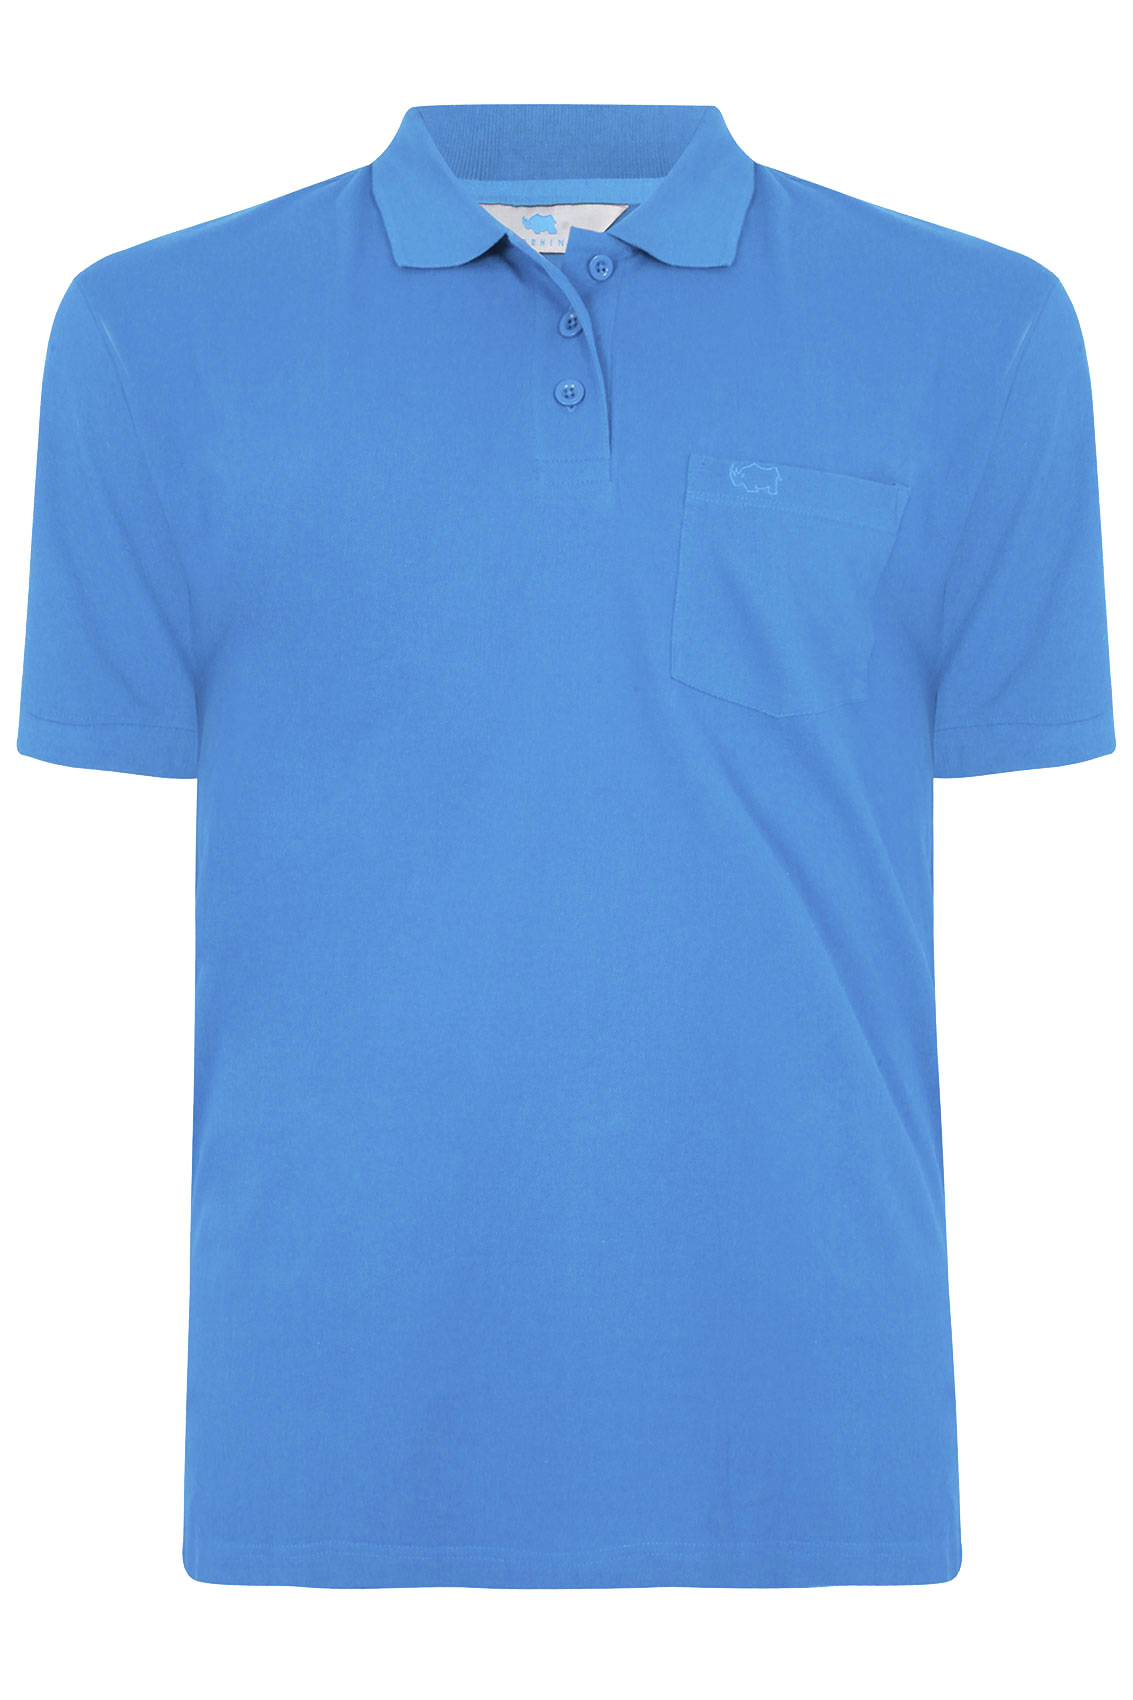 BadRhino Light Blue Plain Polo Shirt Extra large sizes M,L,XL,2XL,3XL ...